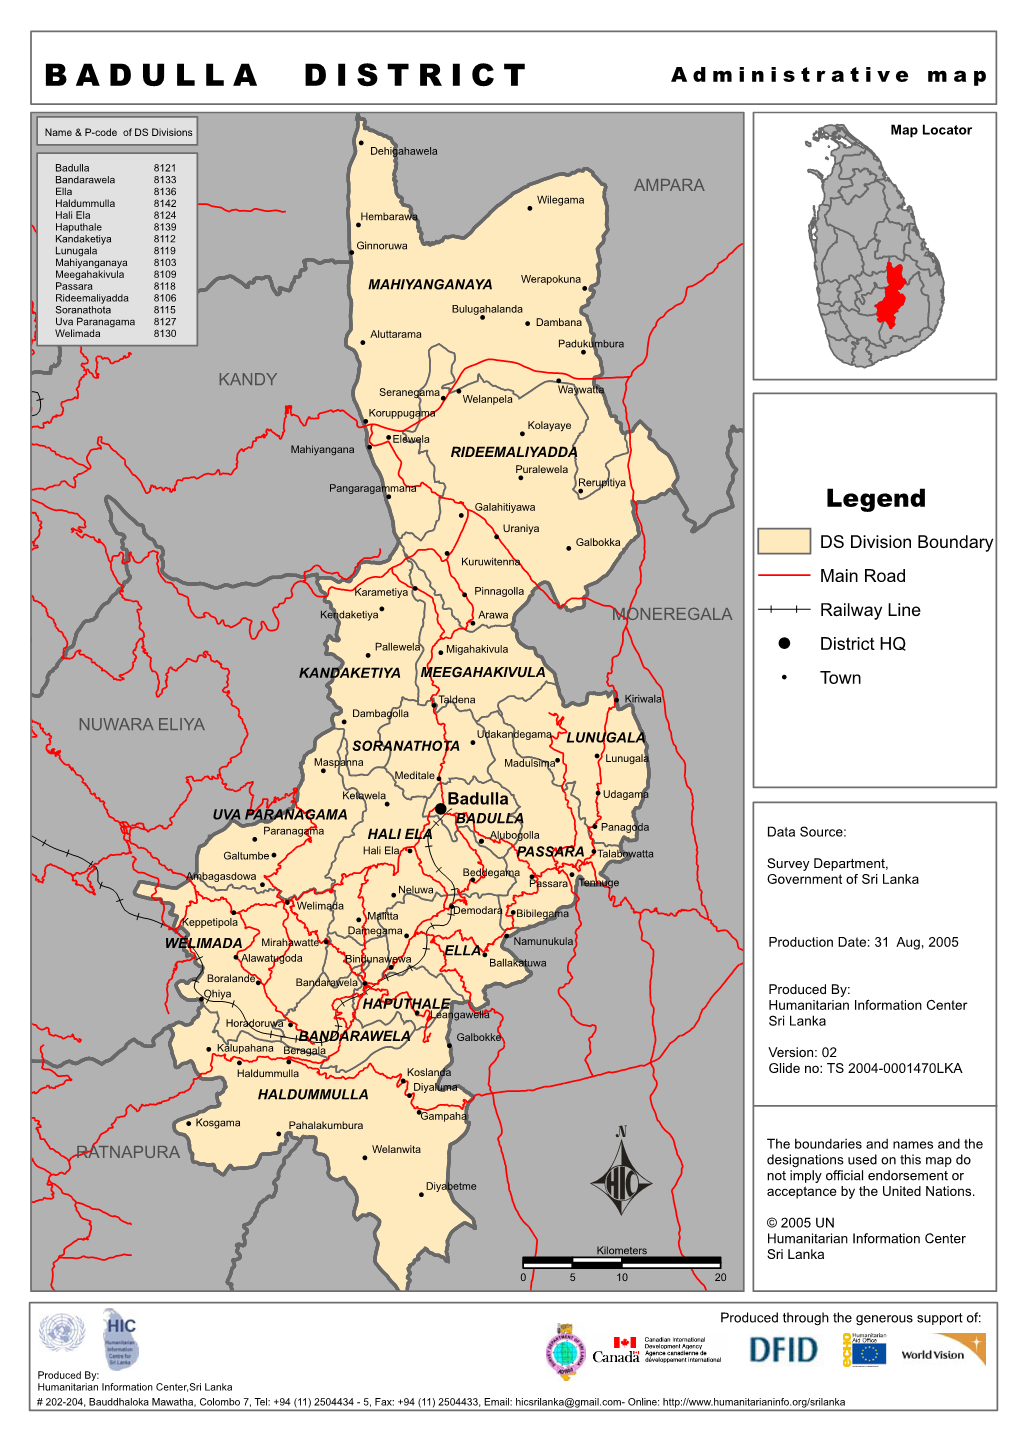 BADULLA DISTRICT Administrative Map